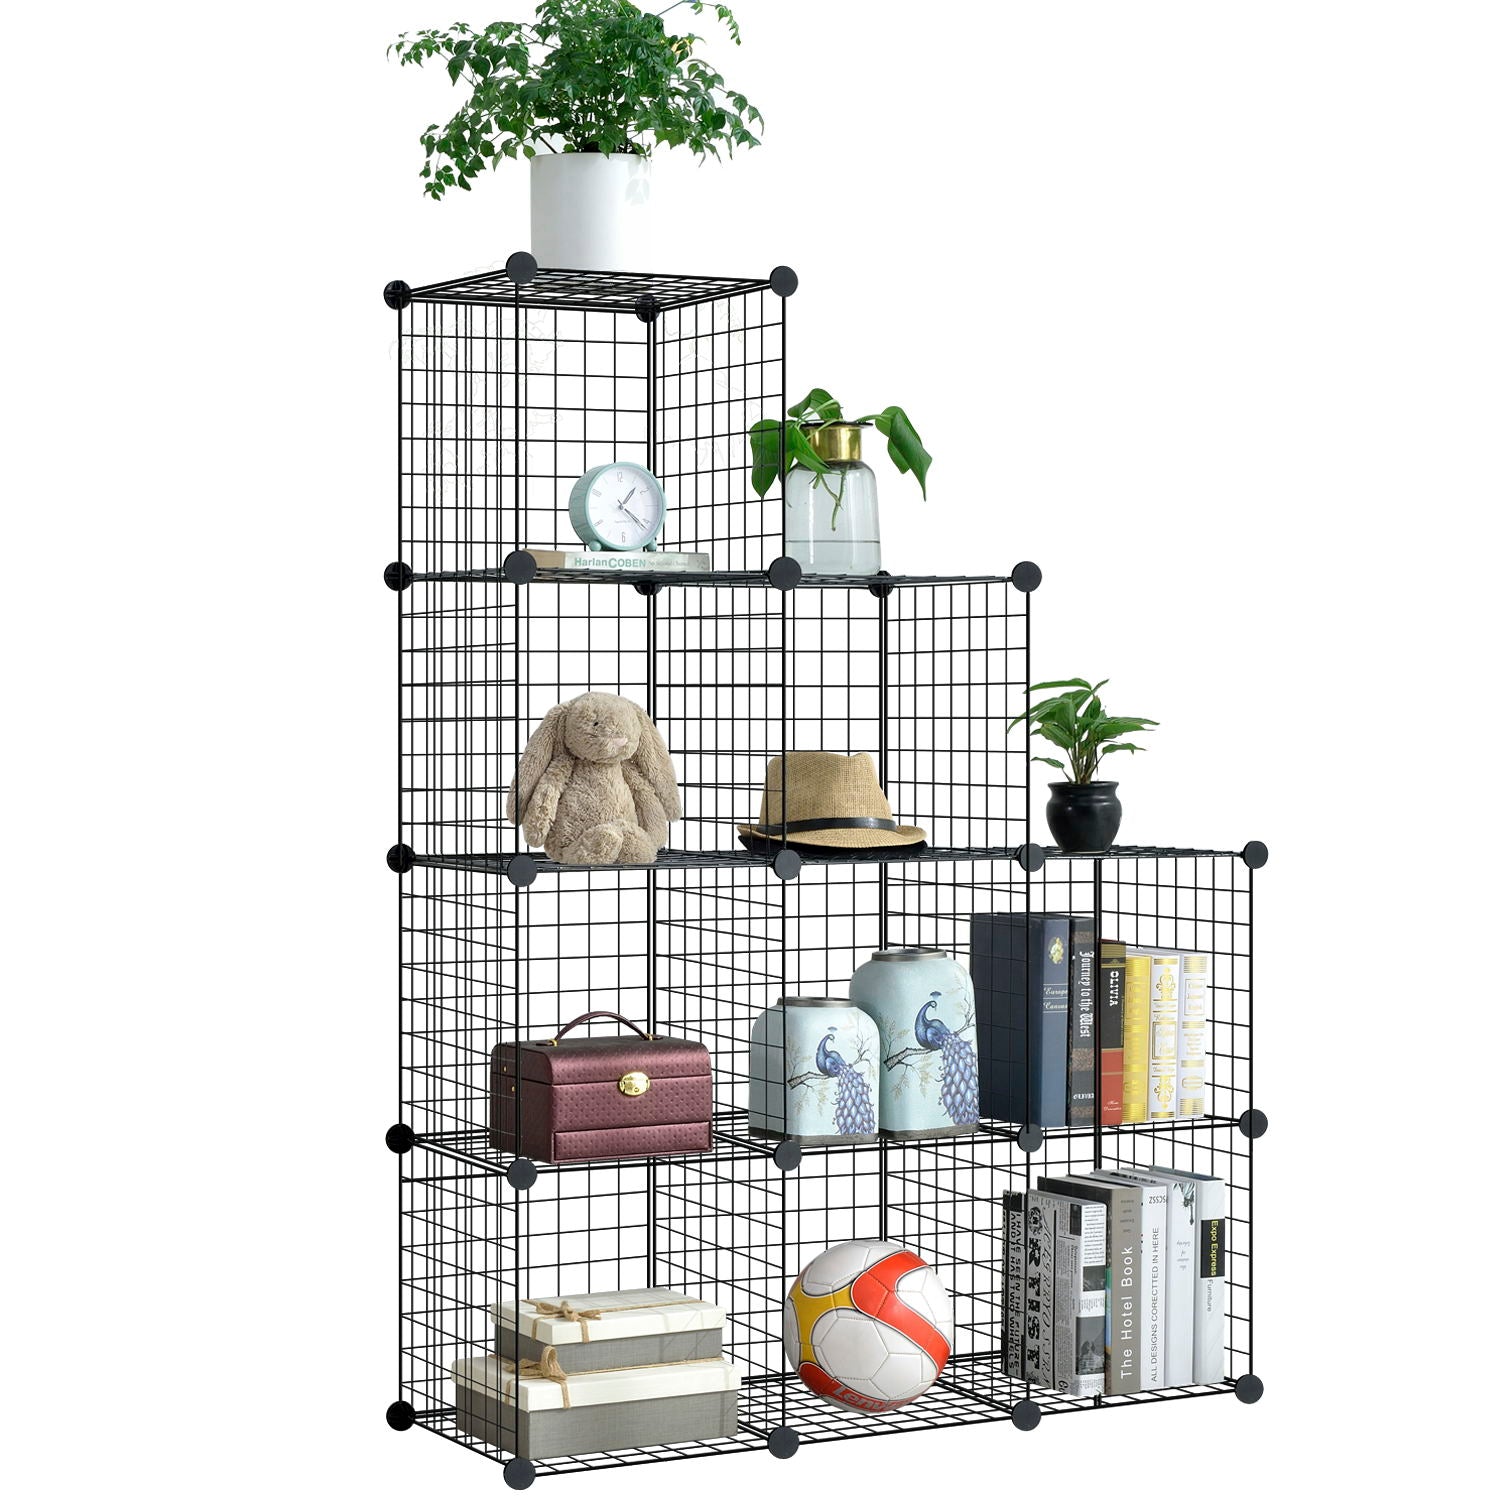 9-Cube Storage Unit, Interlocking Organizer with Design, Bookcase